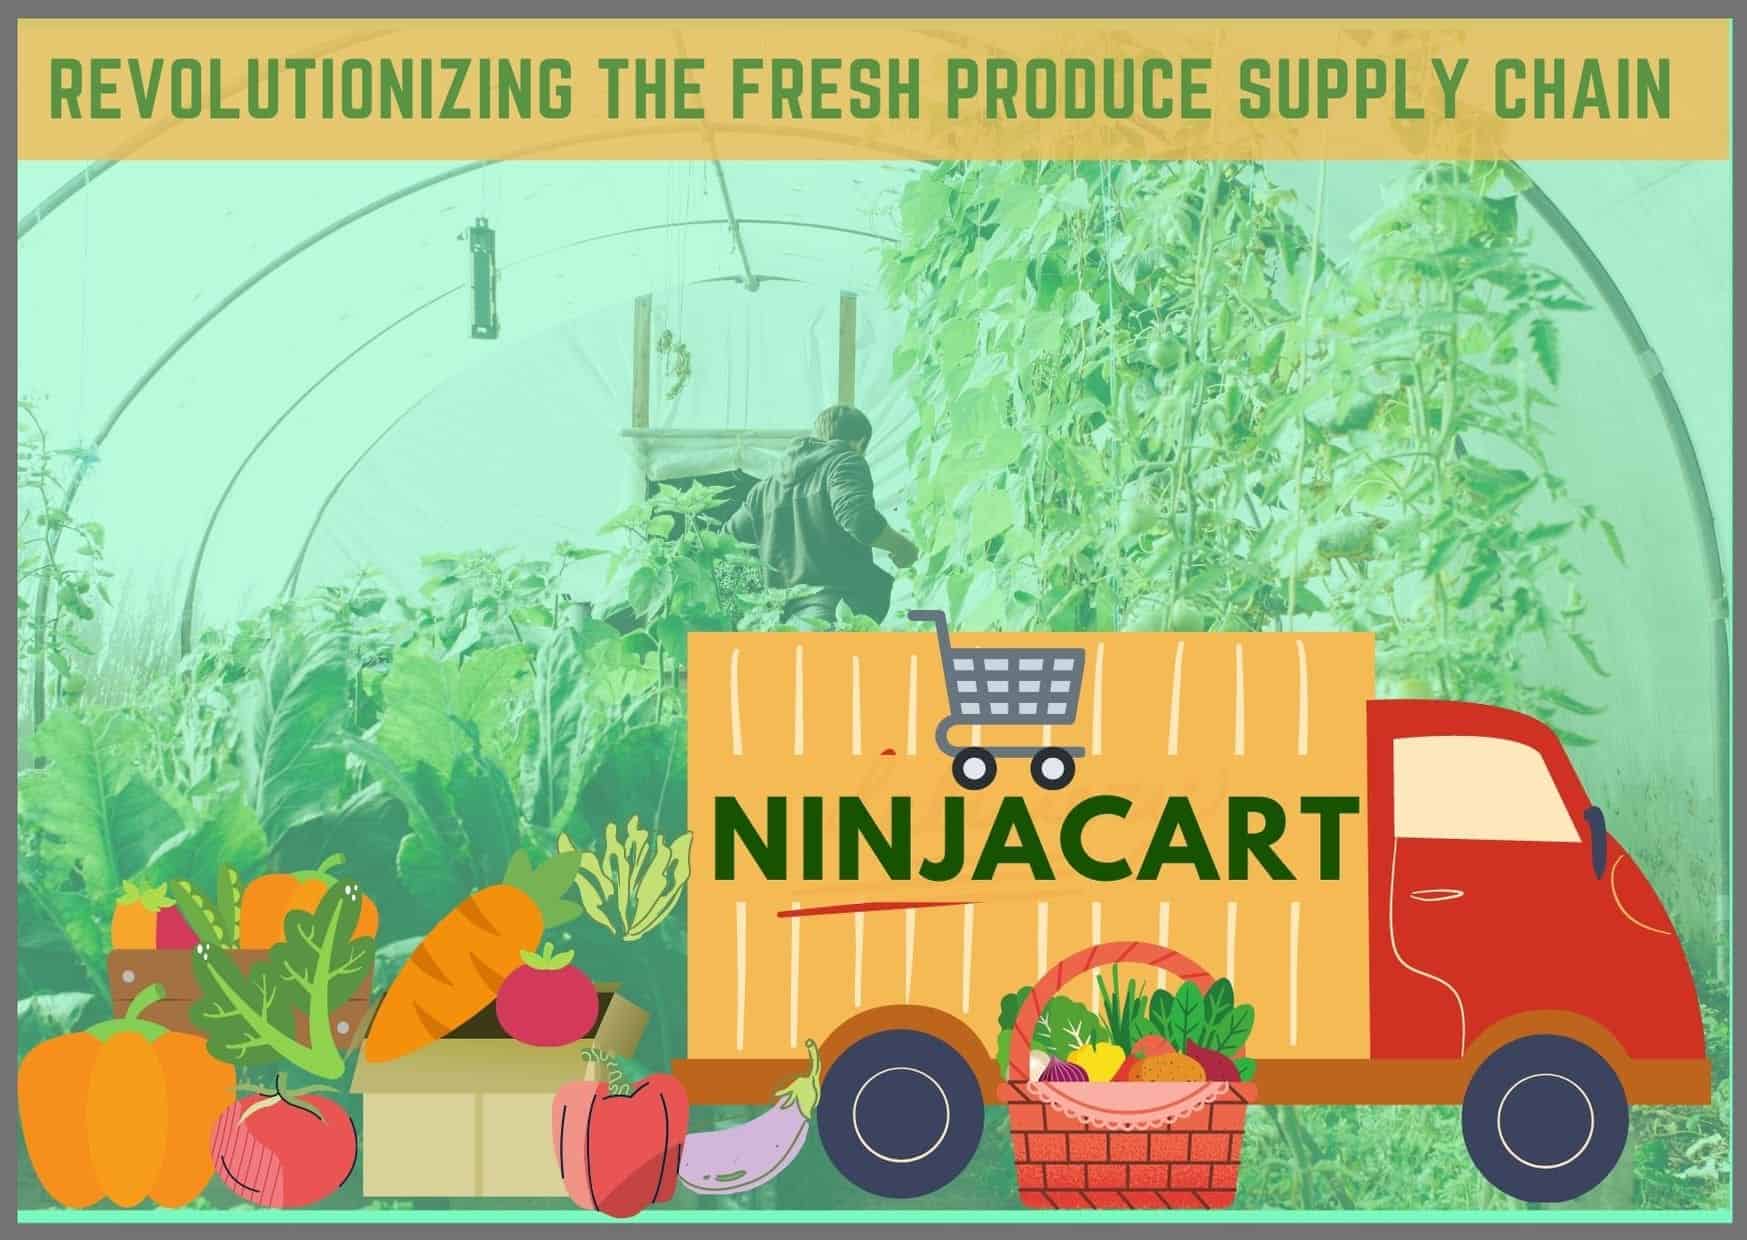 india's largest fresh produce supply chain - ninjacart | ninjacart business model